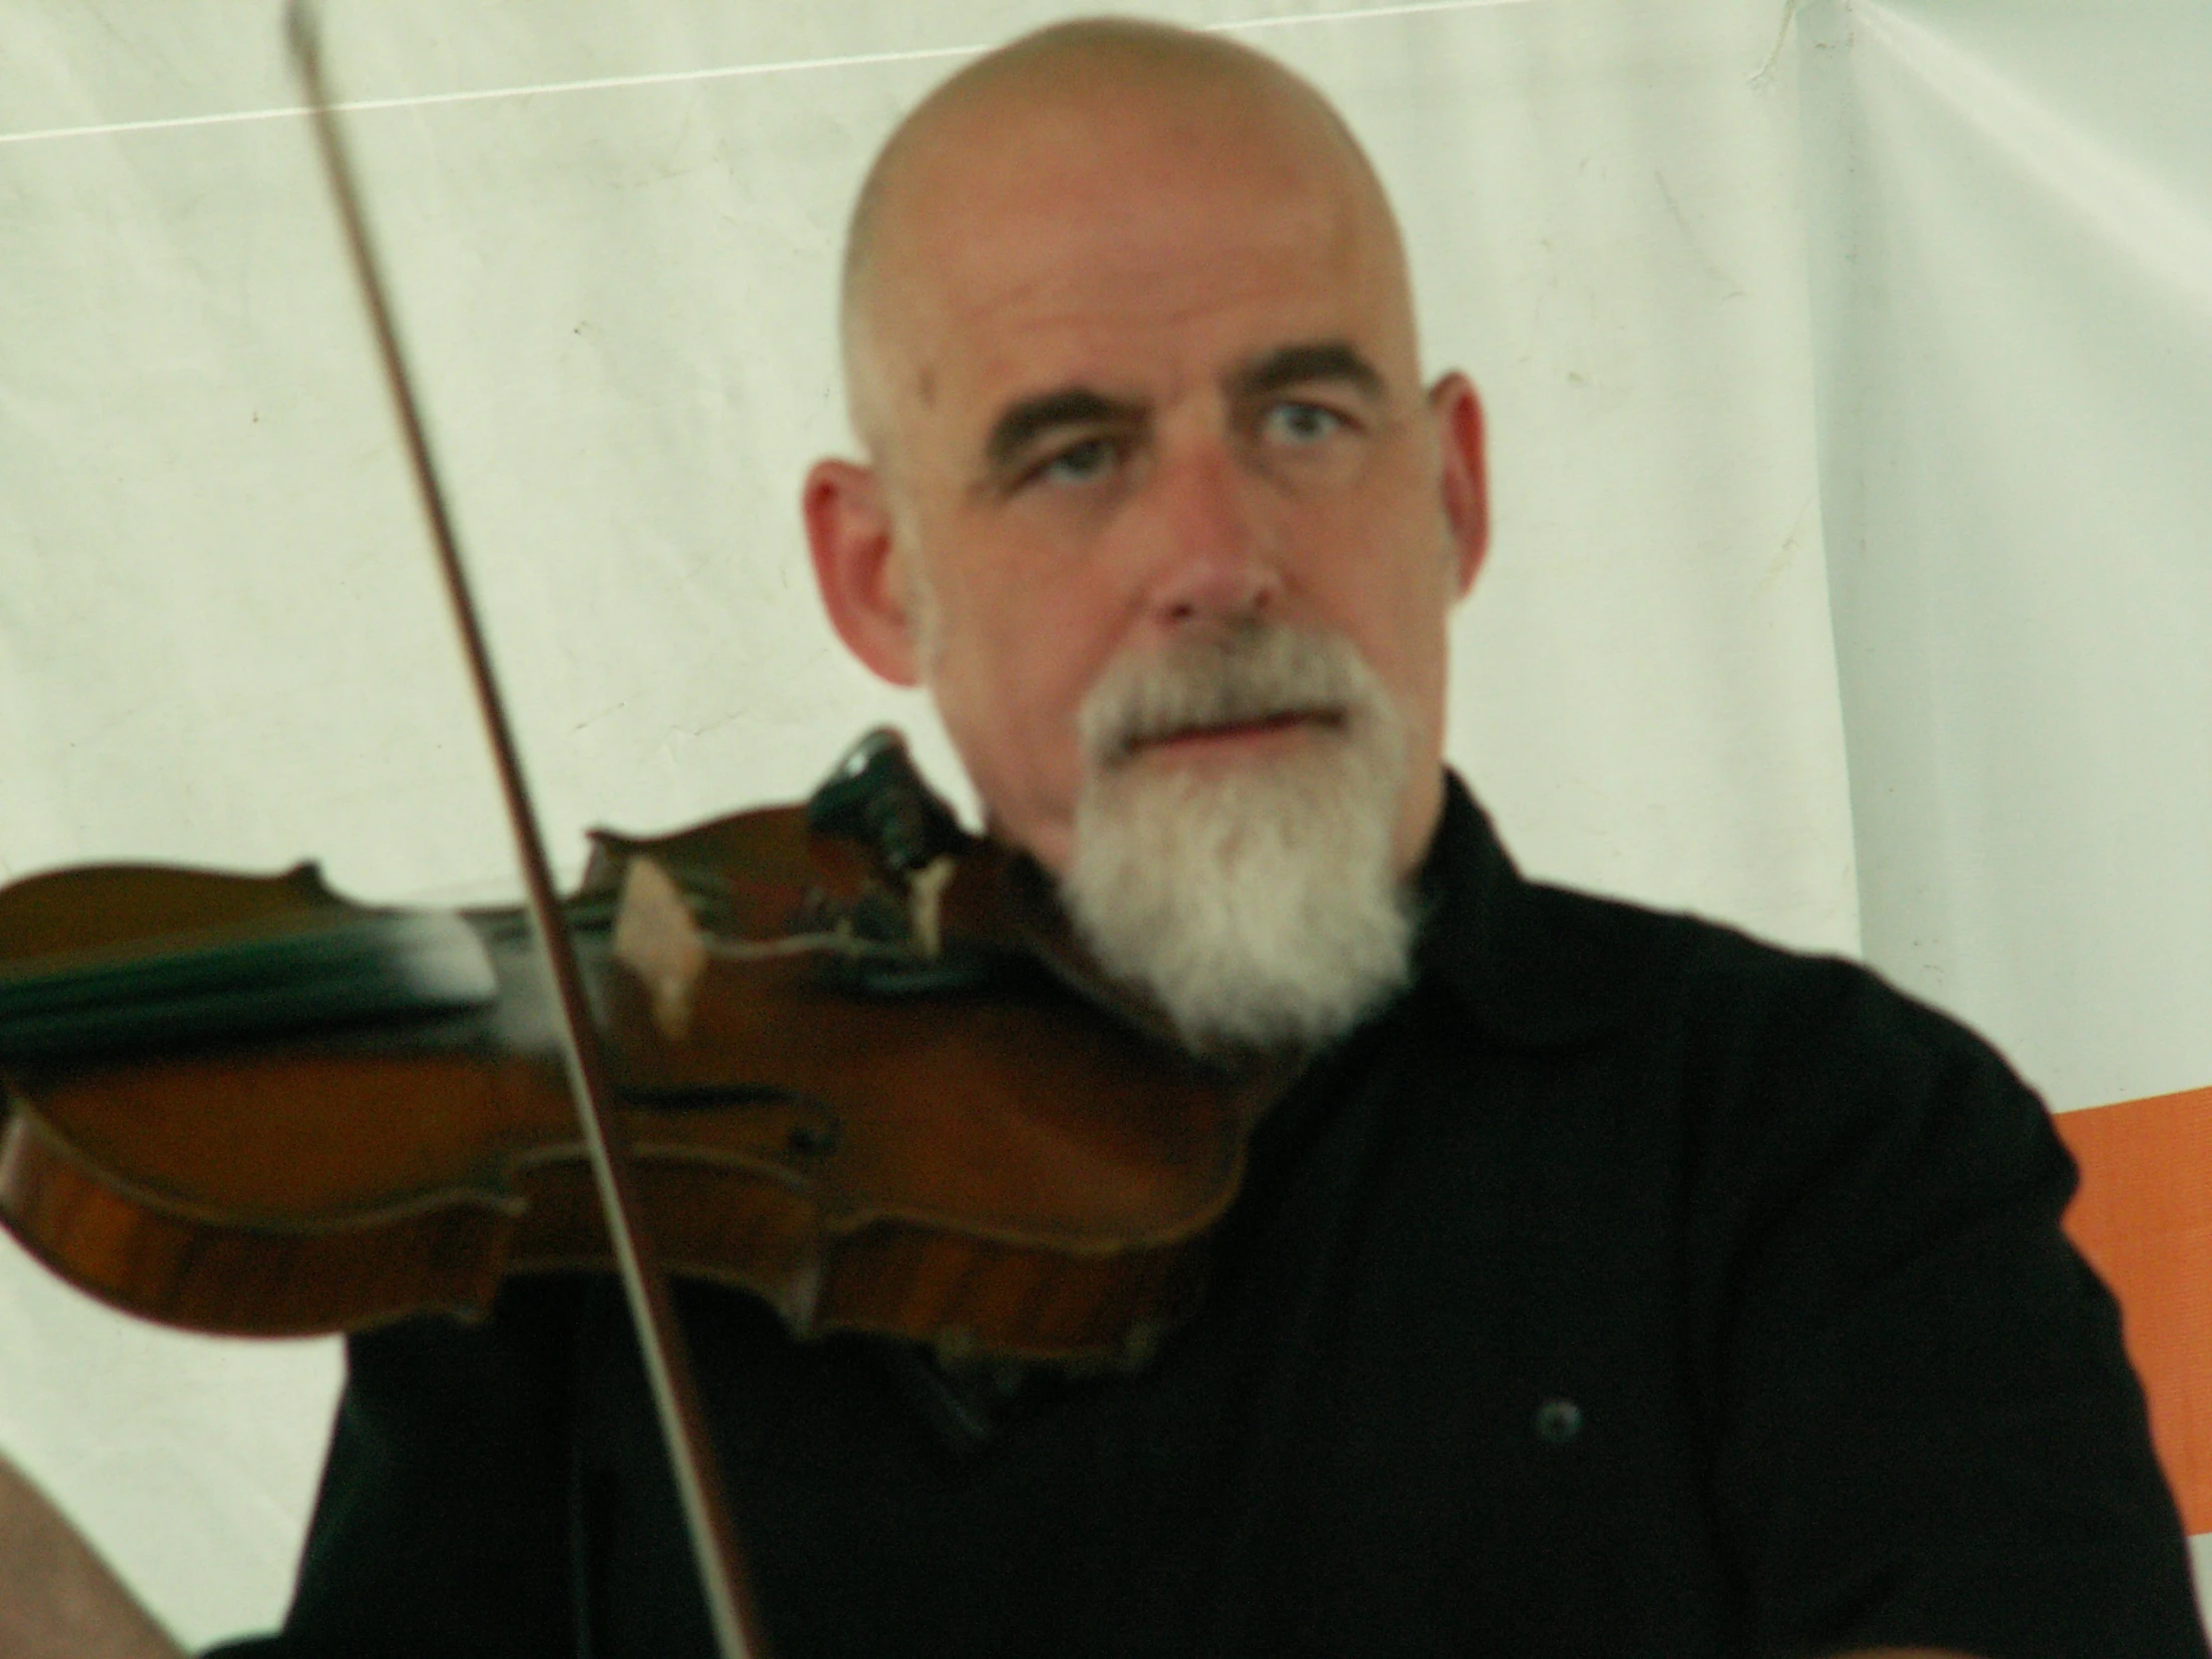 man with beard playing violin and looking forward